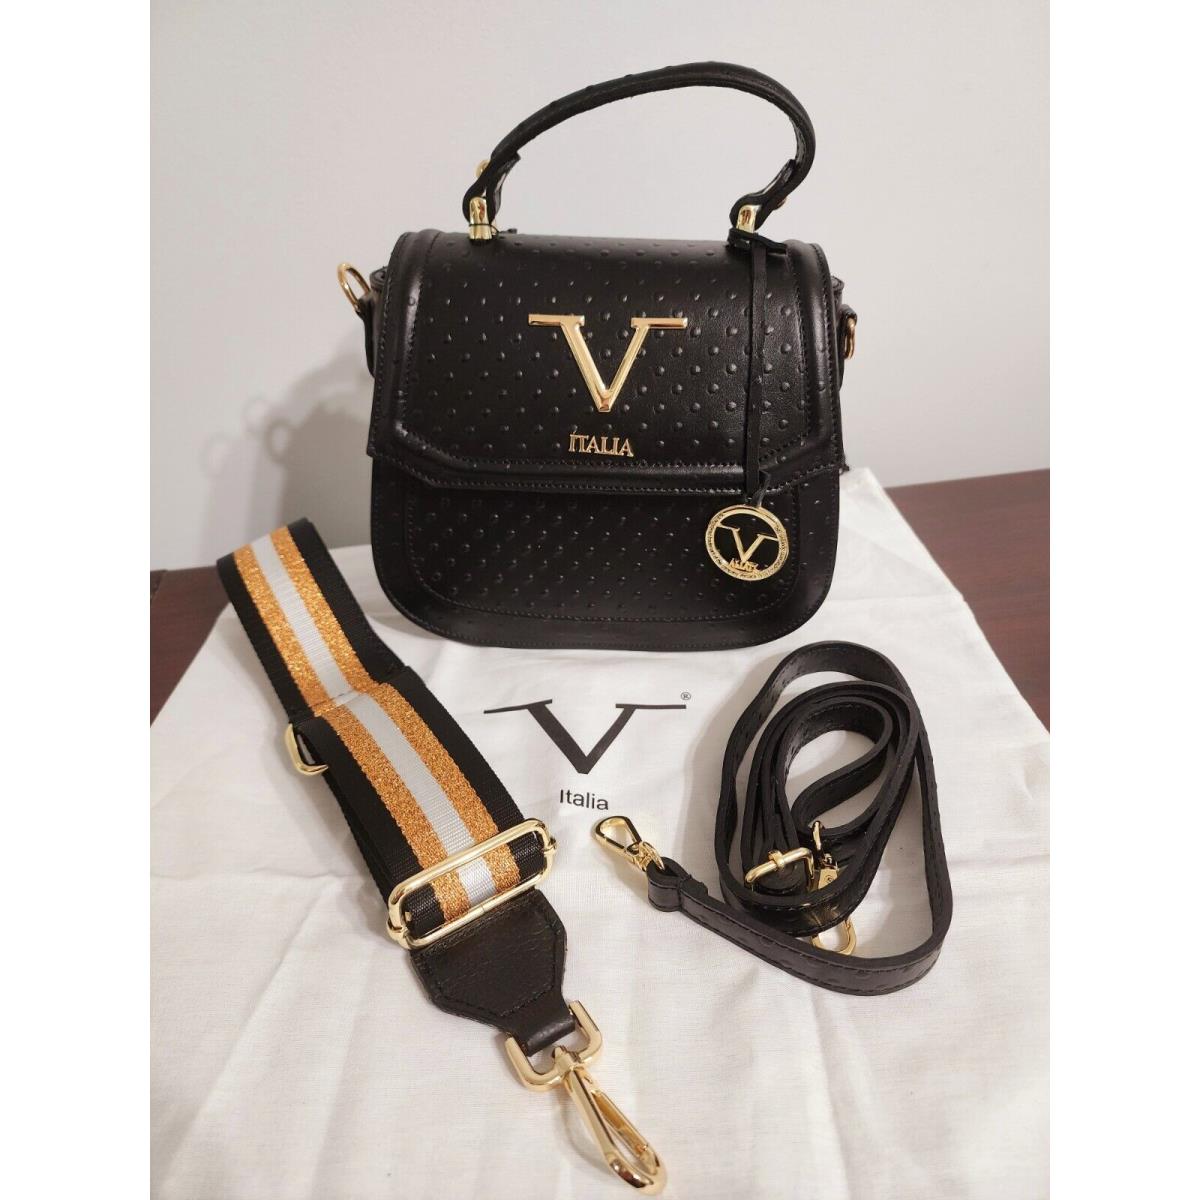 V Italia Versace 1969 Leather Crossbody Handbag Made in Italy Black - Versace  bag 